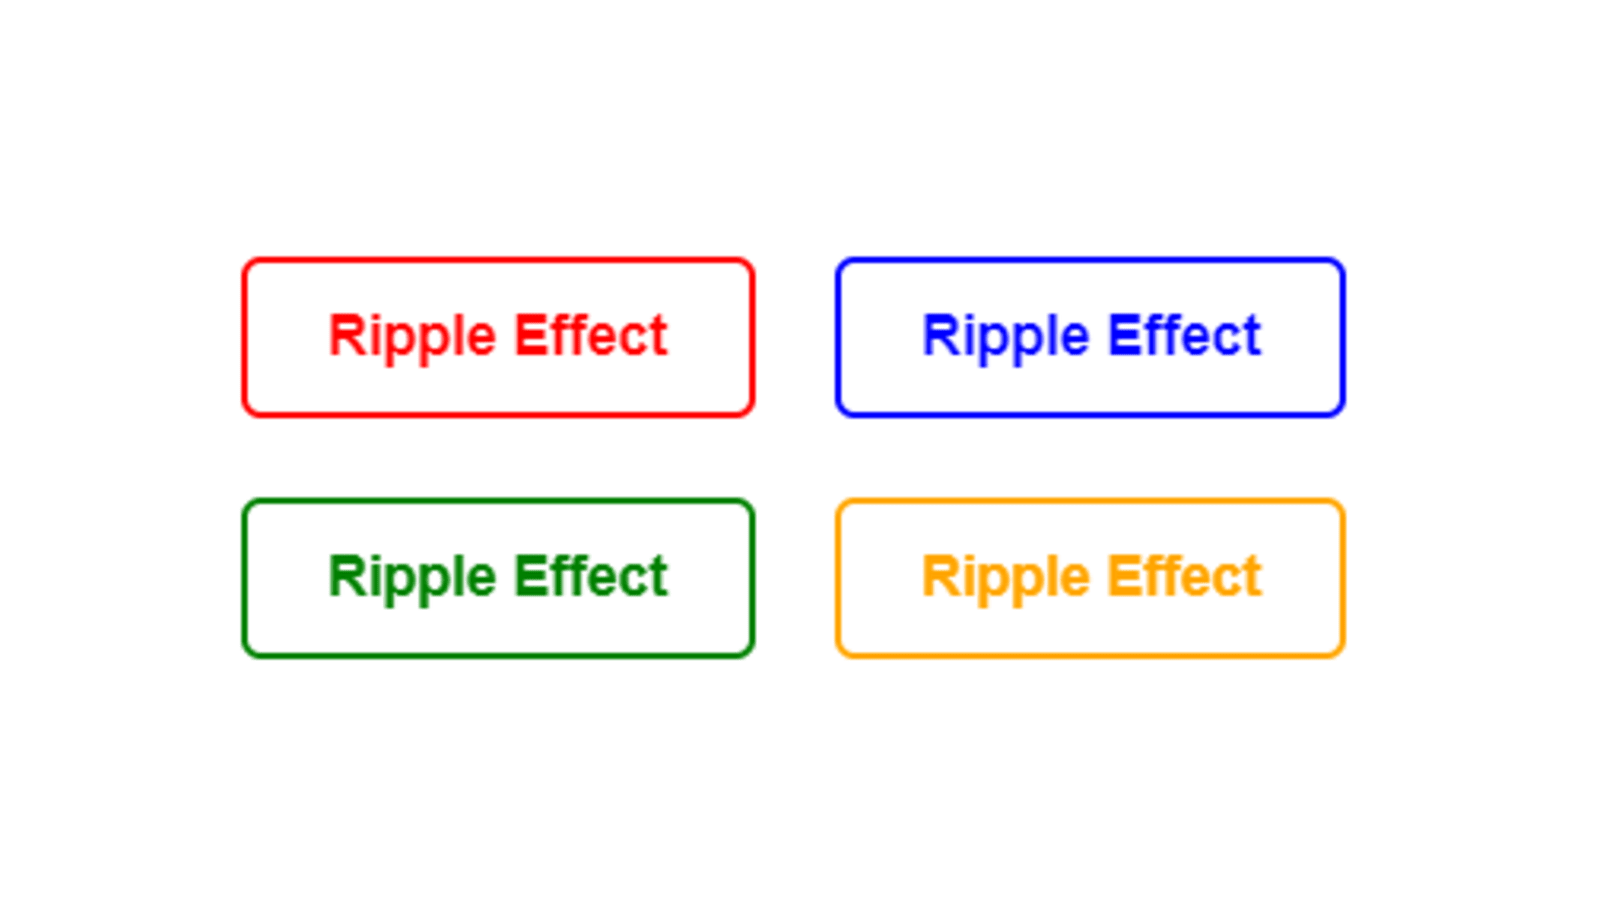 Ripple Effect Button